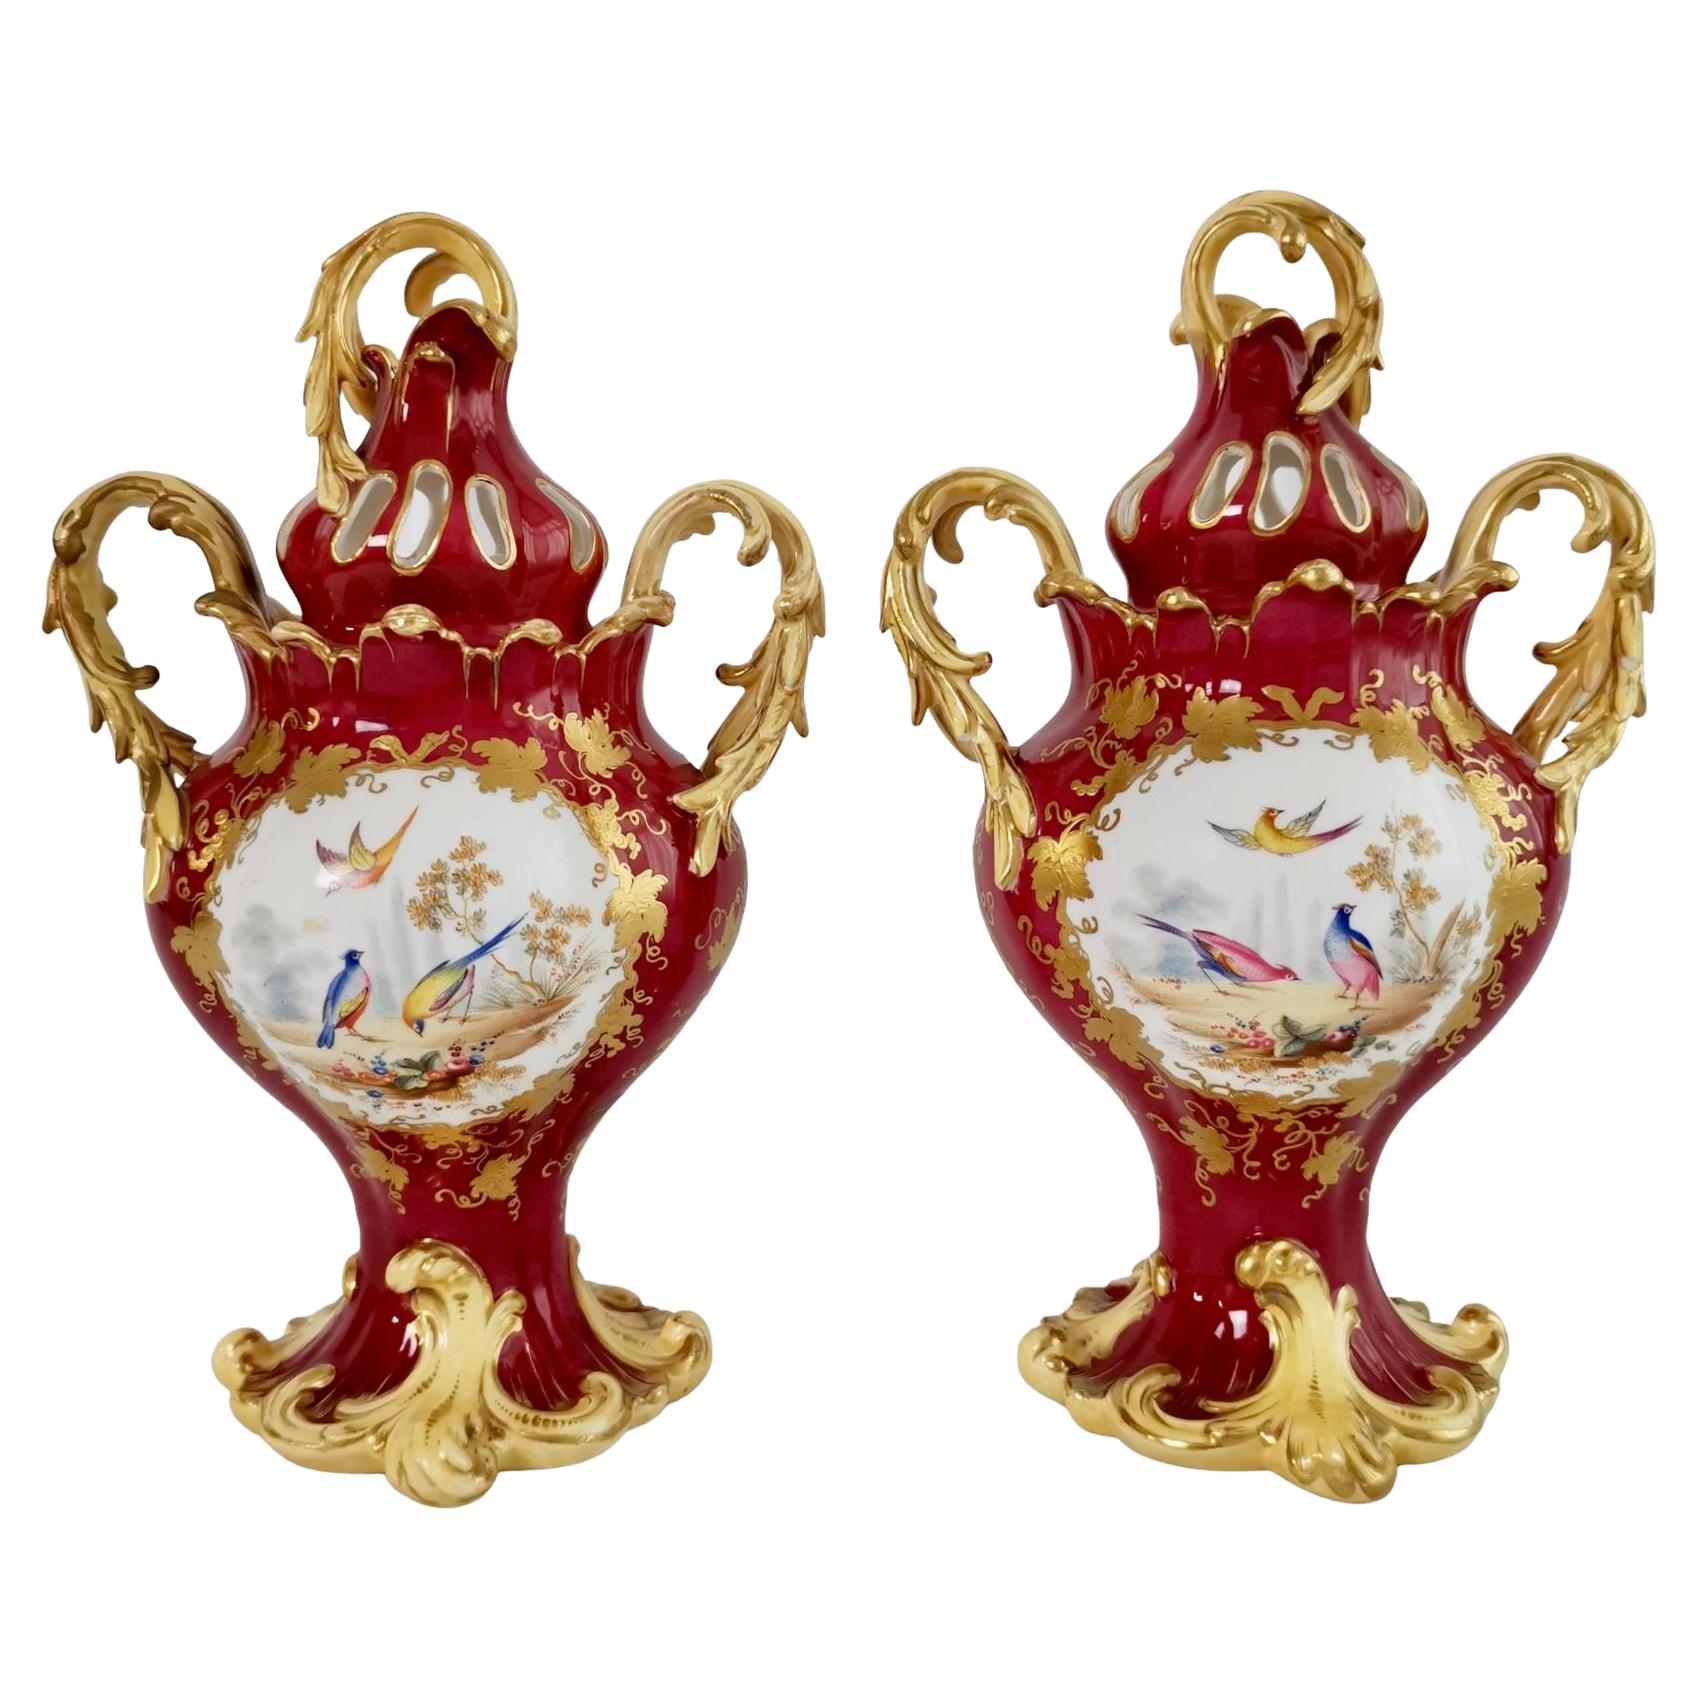 H&R Daniel Pair of Potpourri Vases, Maroon, Birds, Flowers, Rococo Revival c1840 For Sale